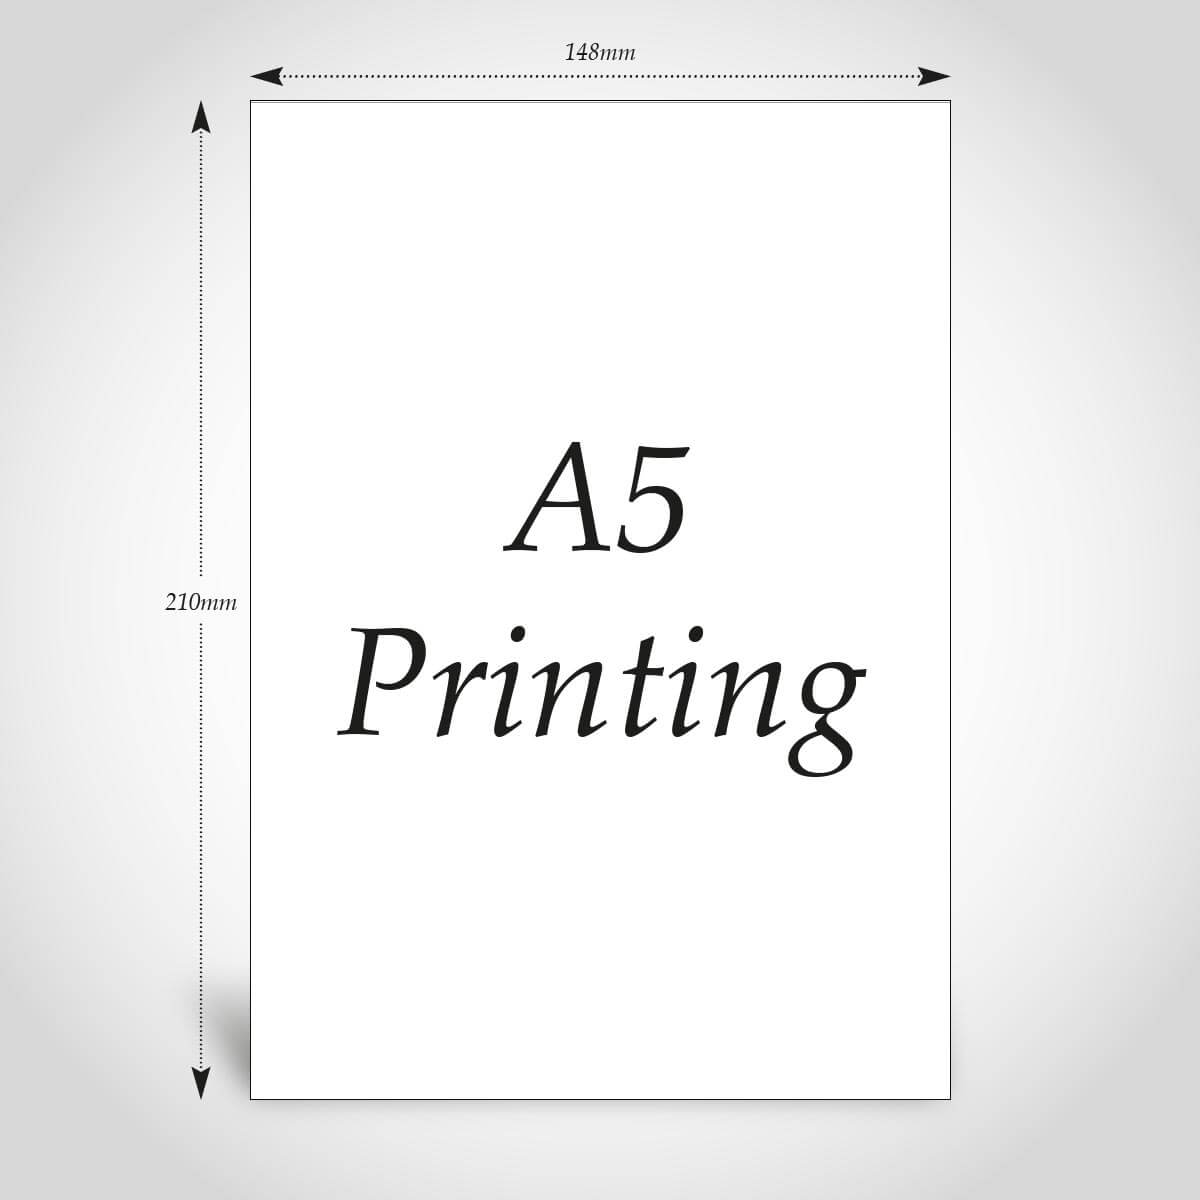 A5 Printing